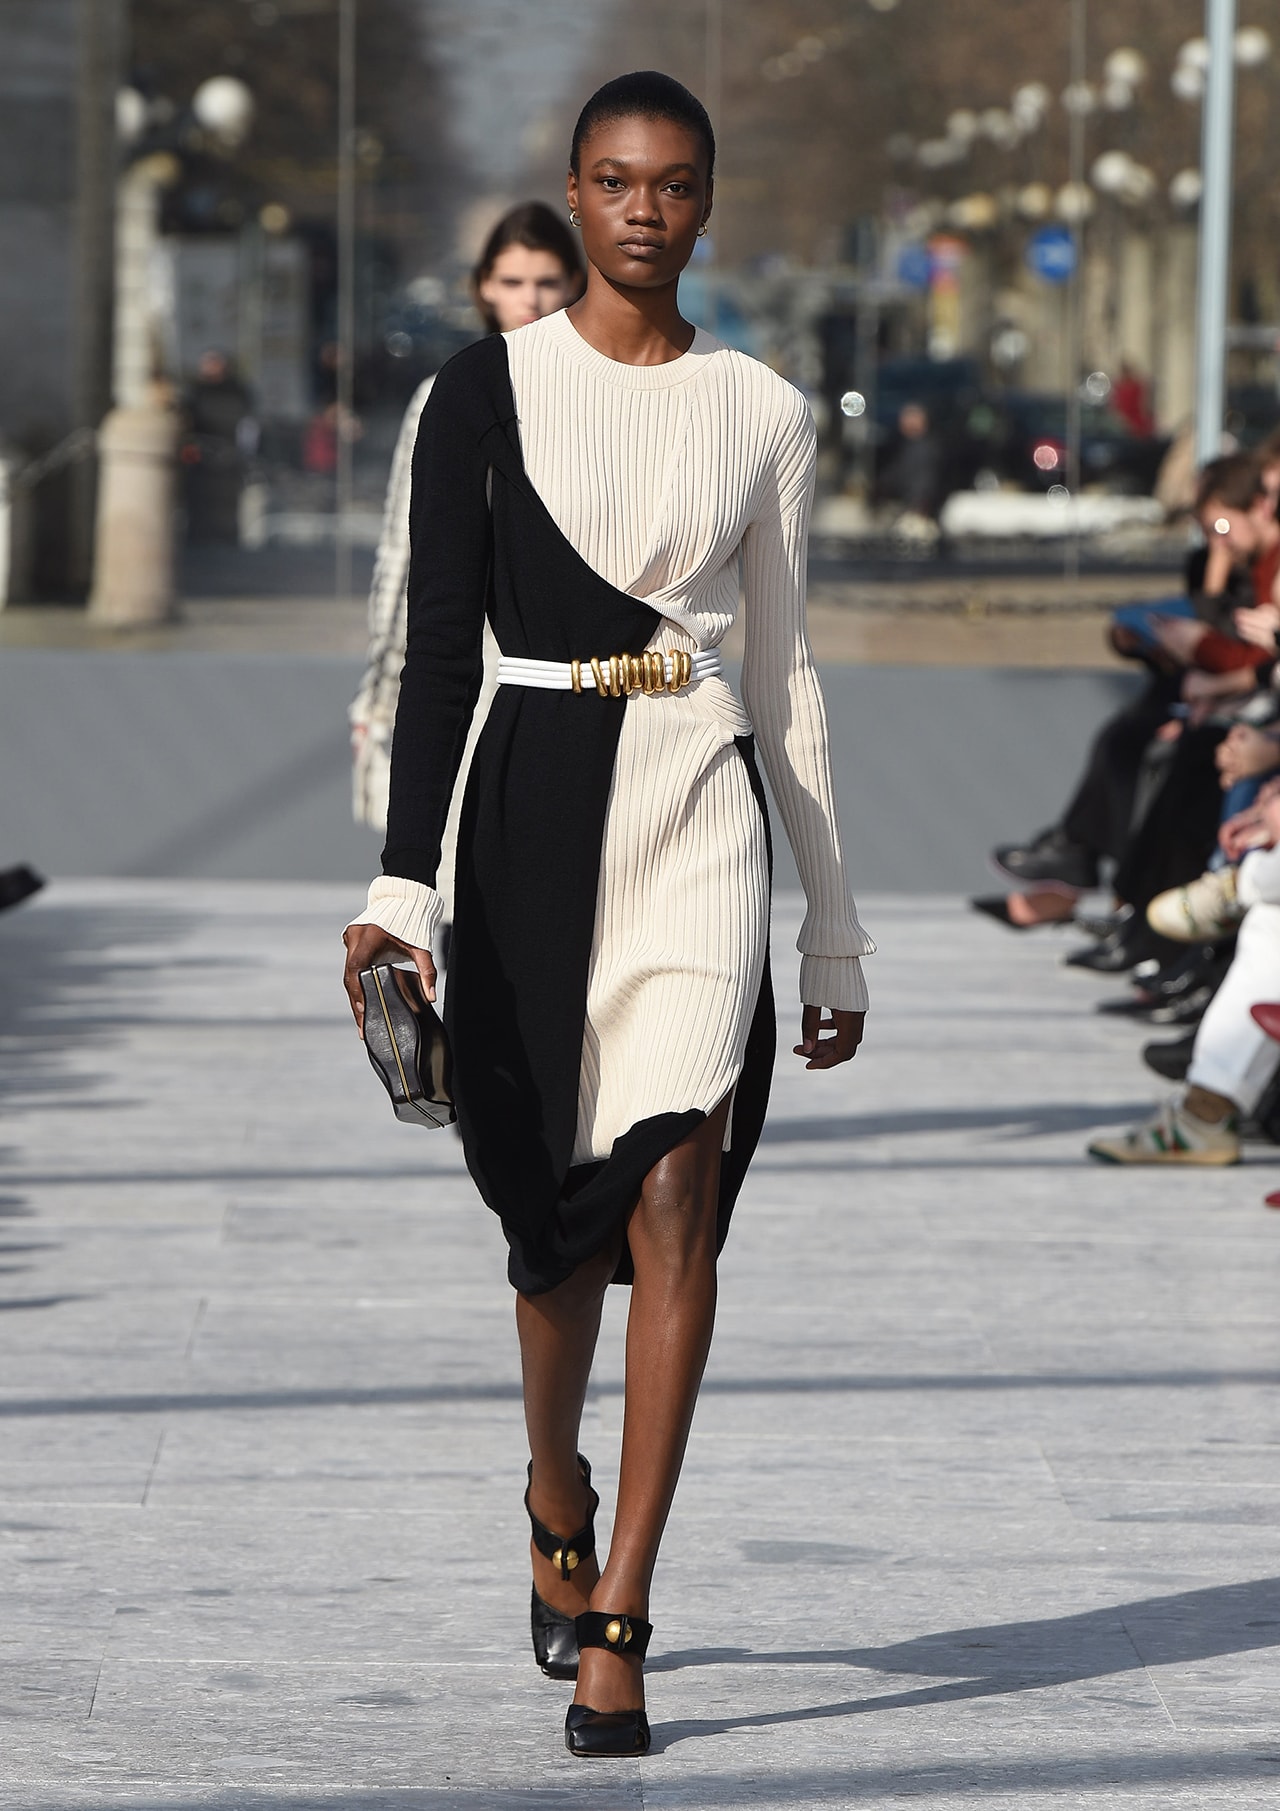 Bottega Veneta Milan Fashion Week Fall Winter 2019 FW19 Daniel Lee Debut Runway Show white black dress